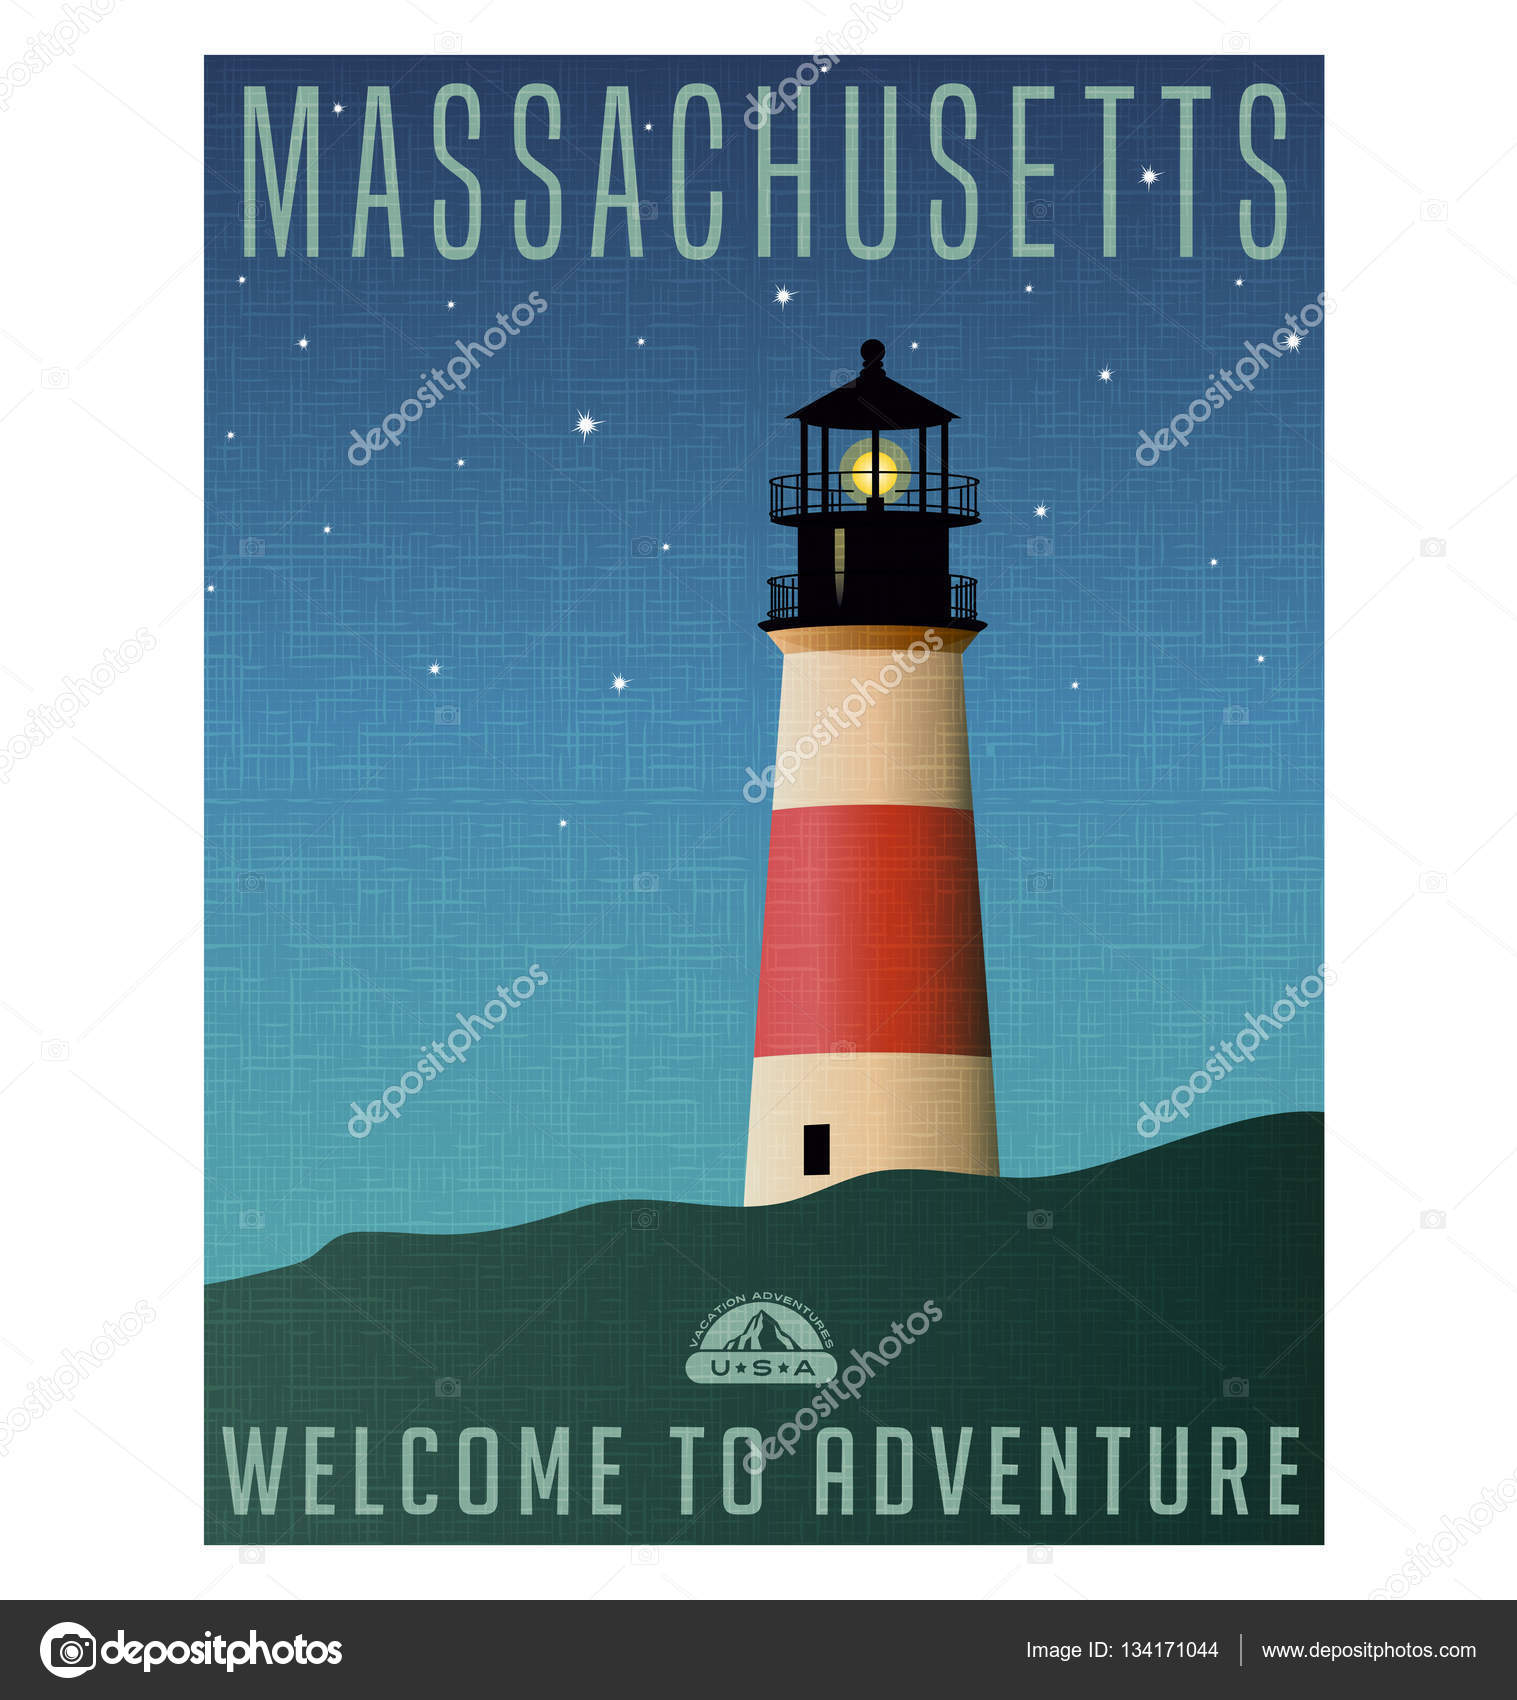 Travel Stickers East Coast Usa Stock Illustration - Download Image